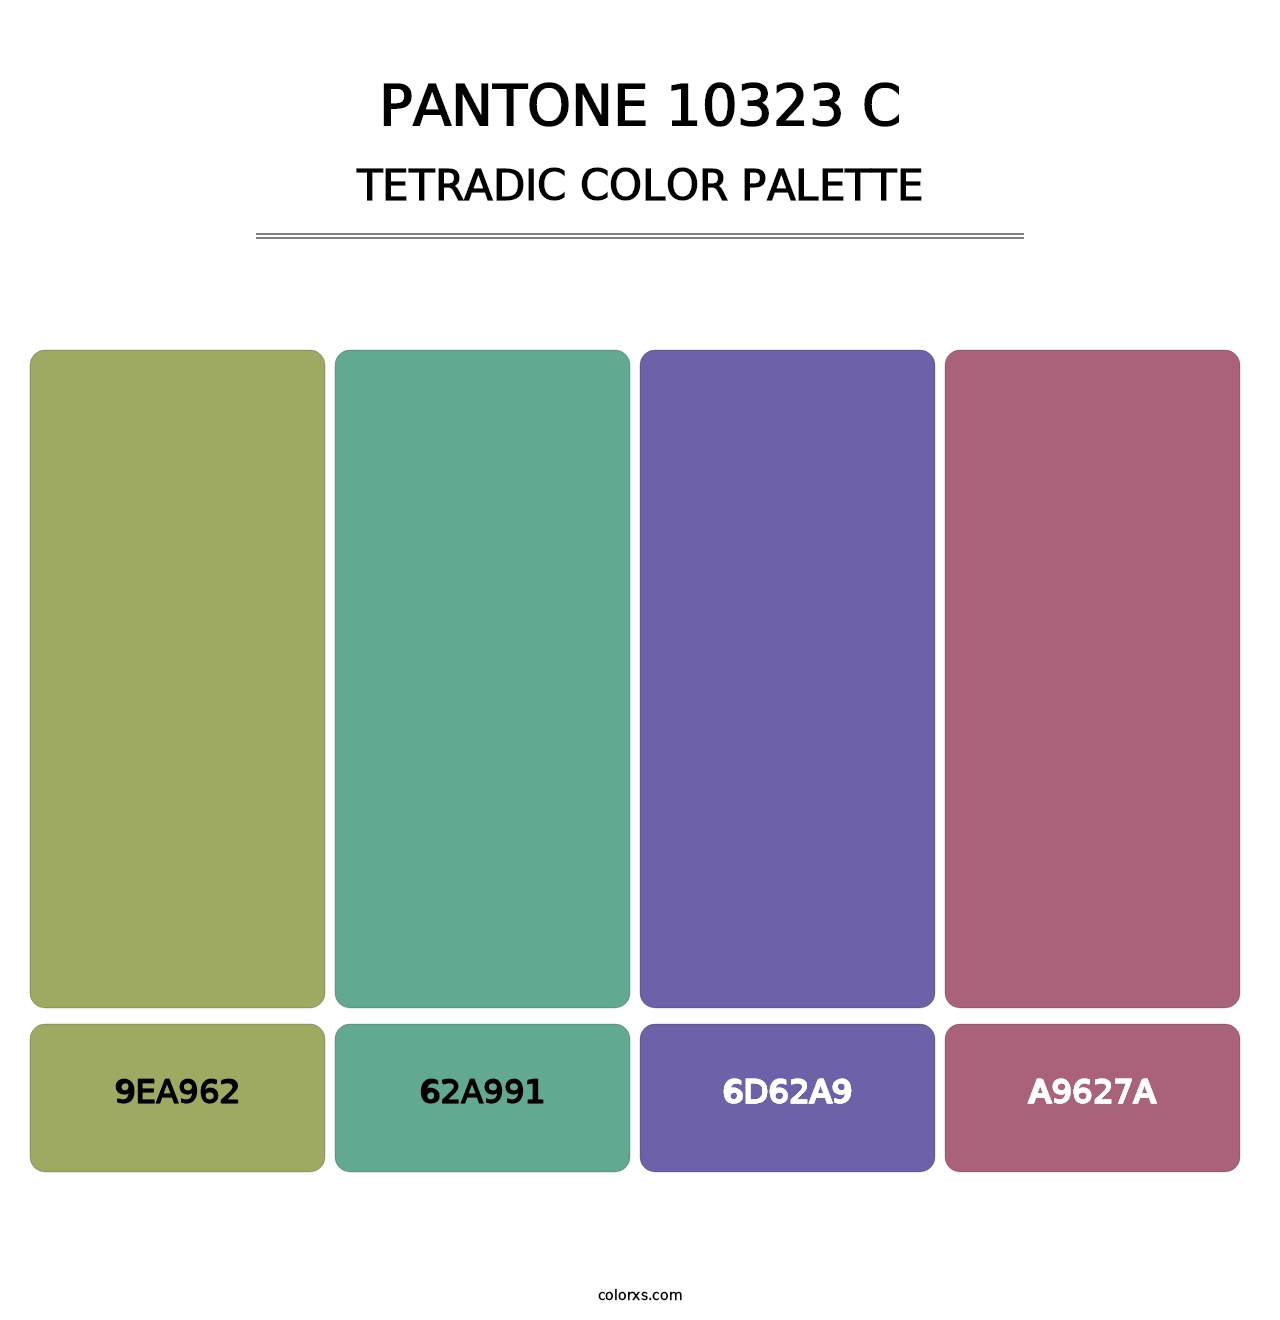 PANTONE 10323 C - Tetradic Color Palette